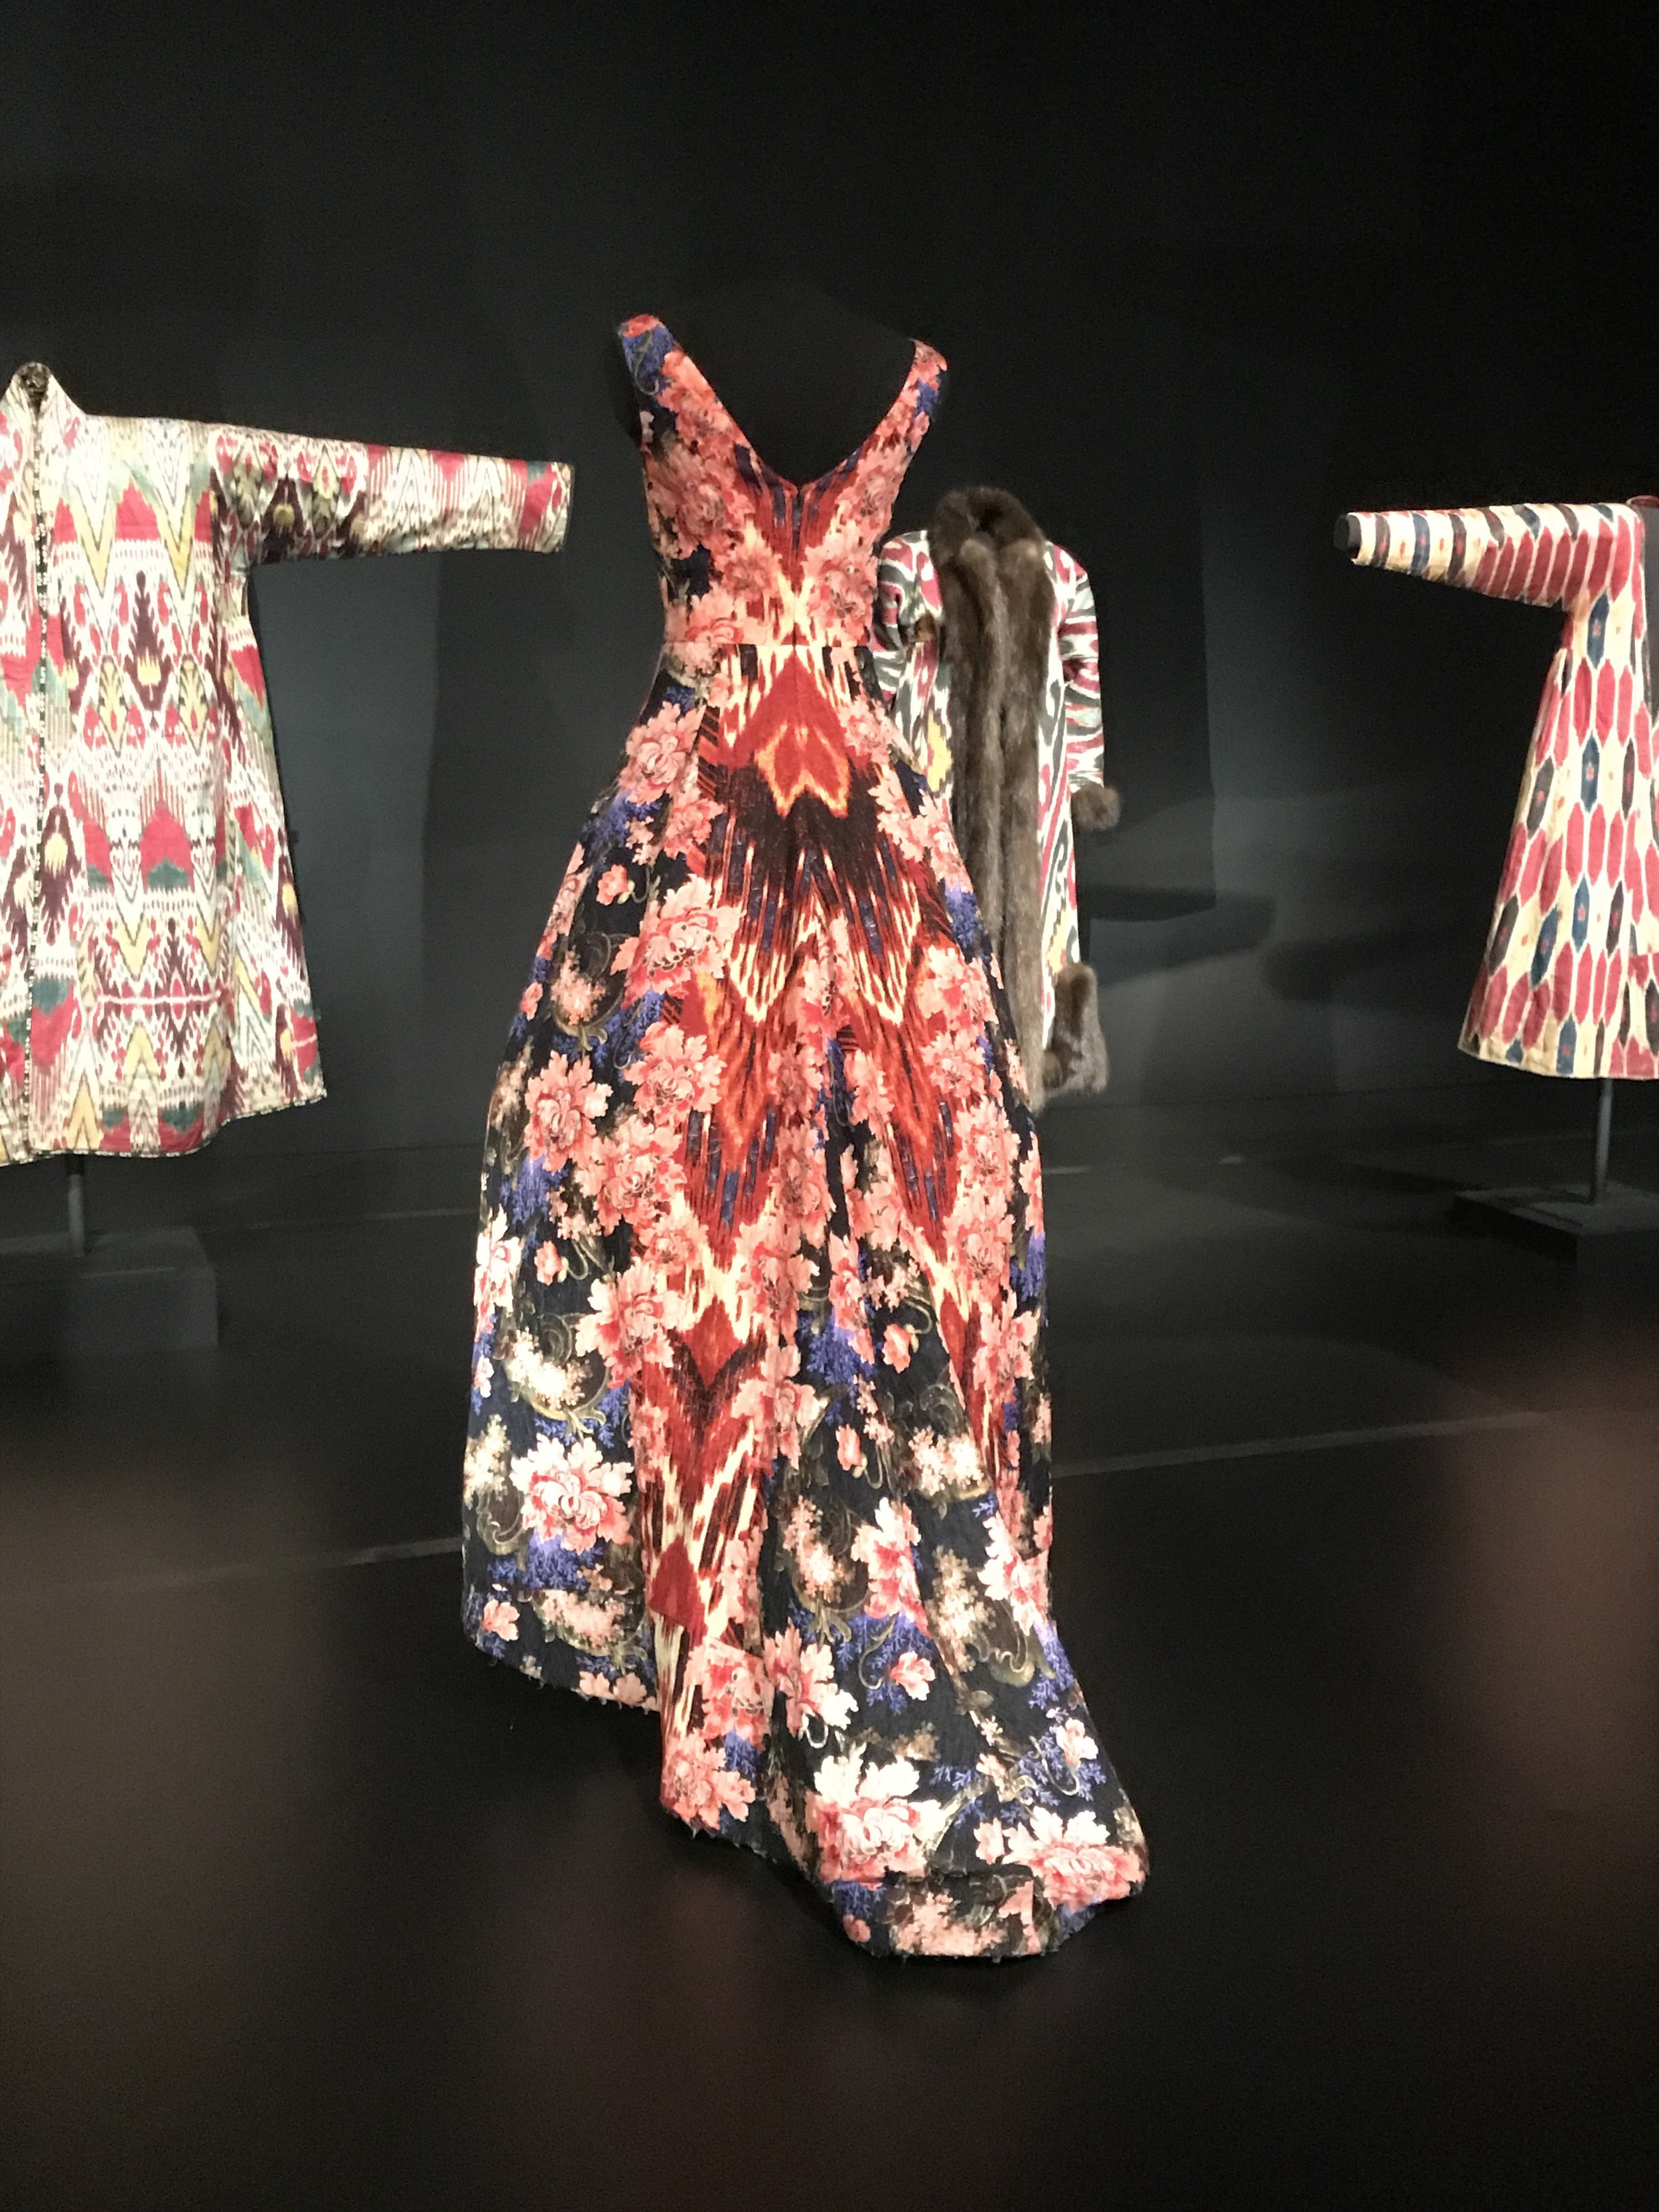 Uzbek Ikat (specially dyed fabric) in an Oscar de la Renta dress. Freer and Sackler Gallery, Washington, DC